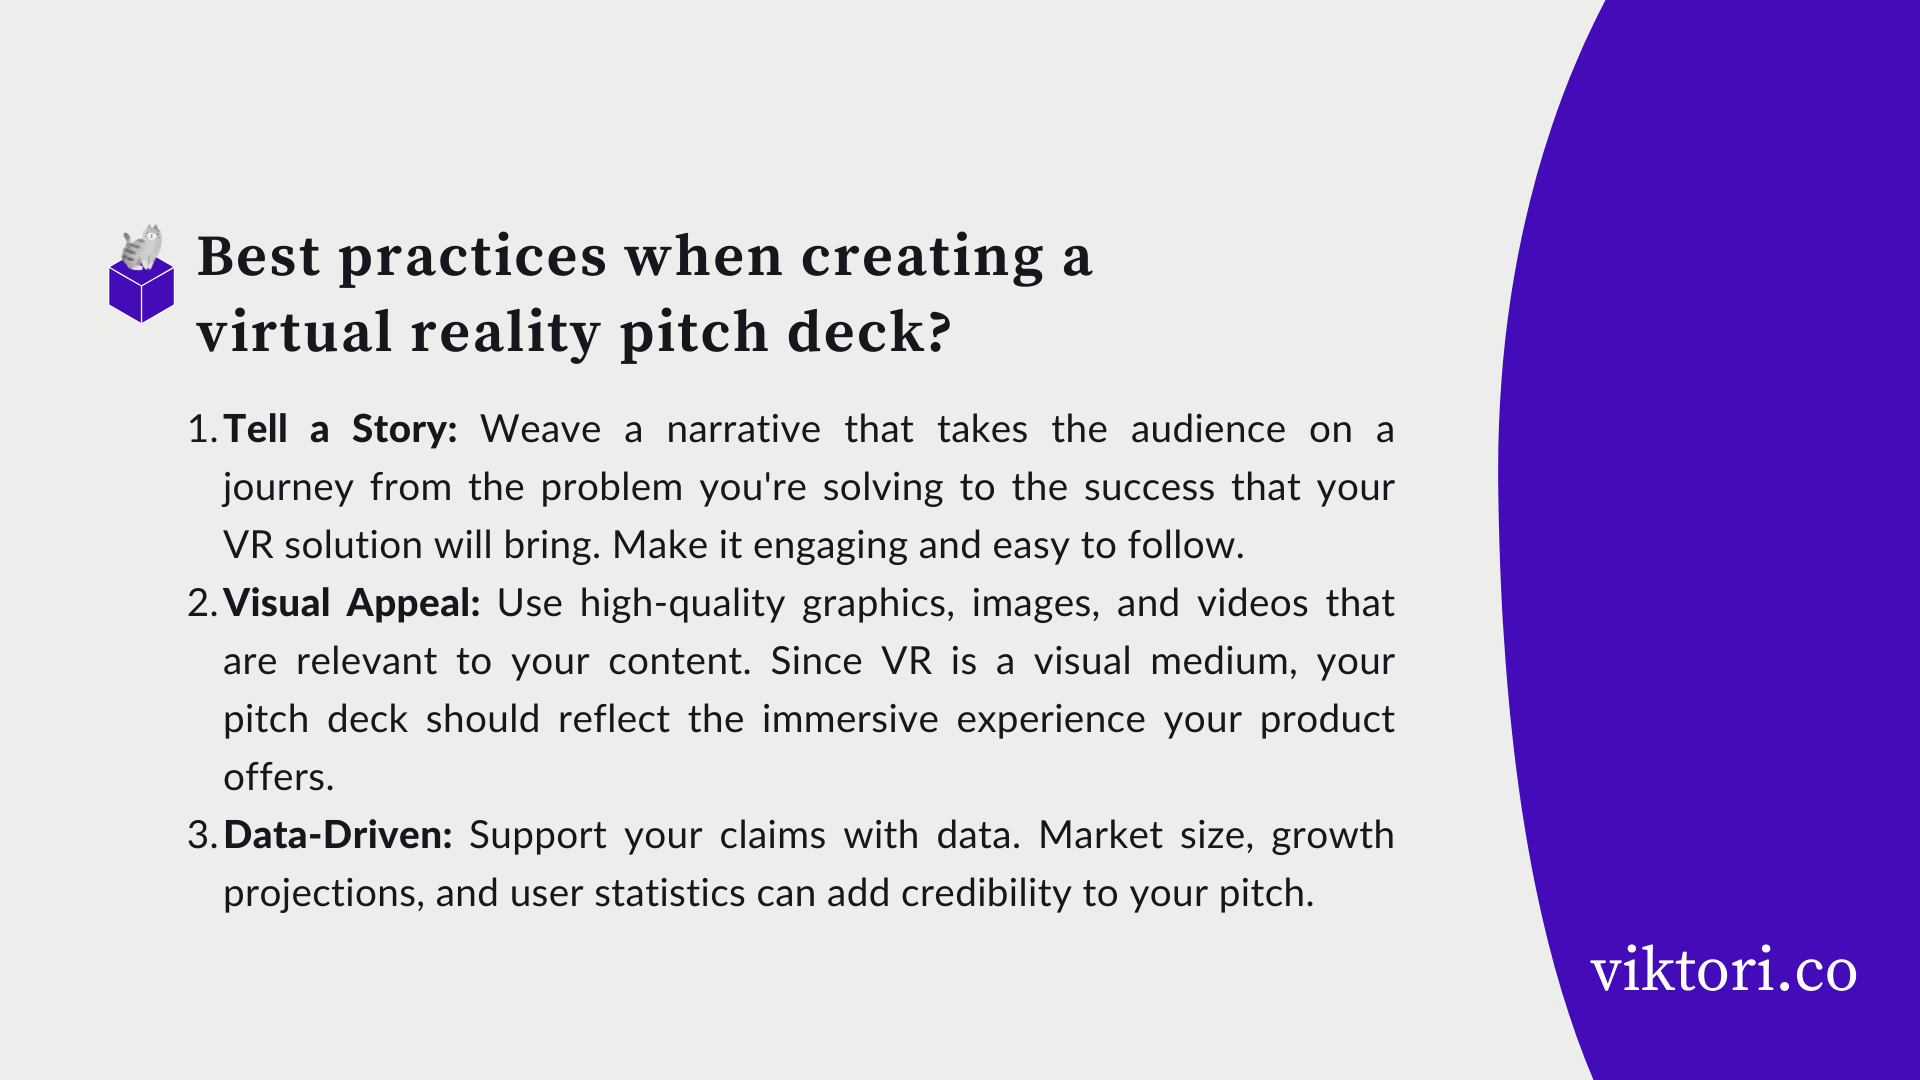 vr pitch deck best practices